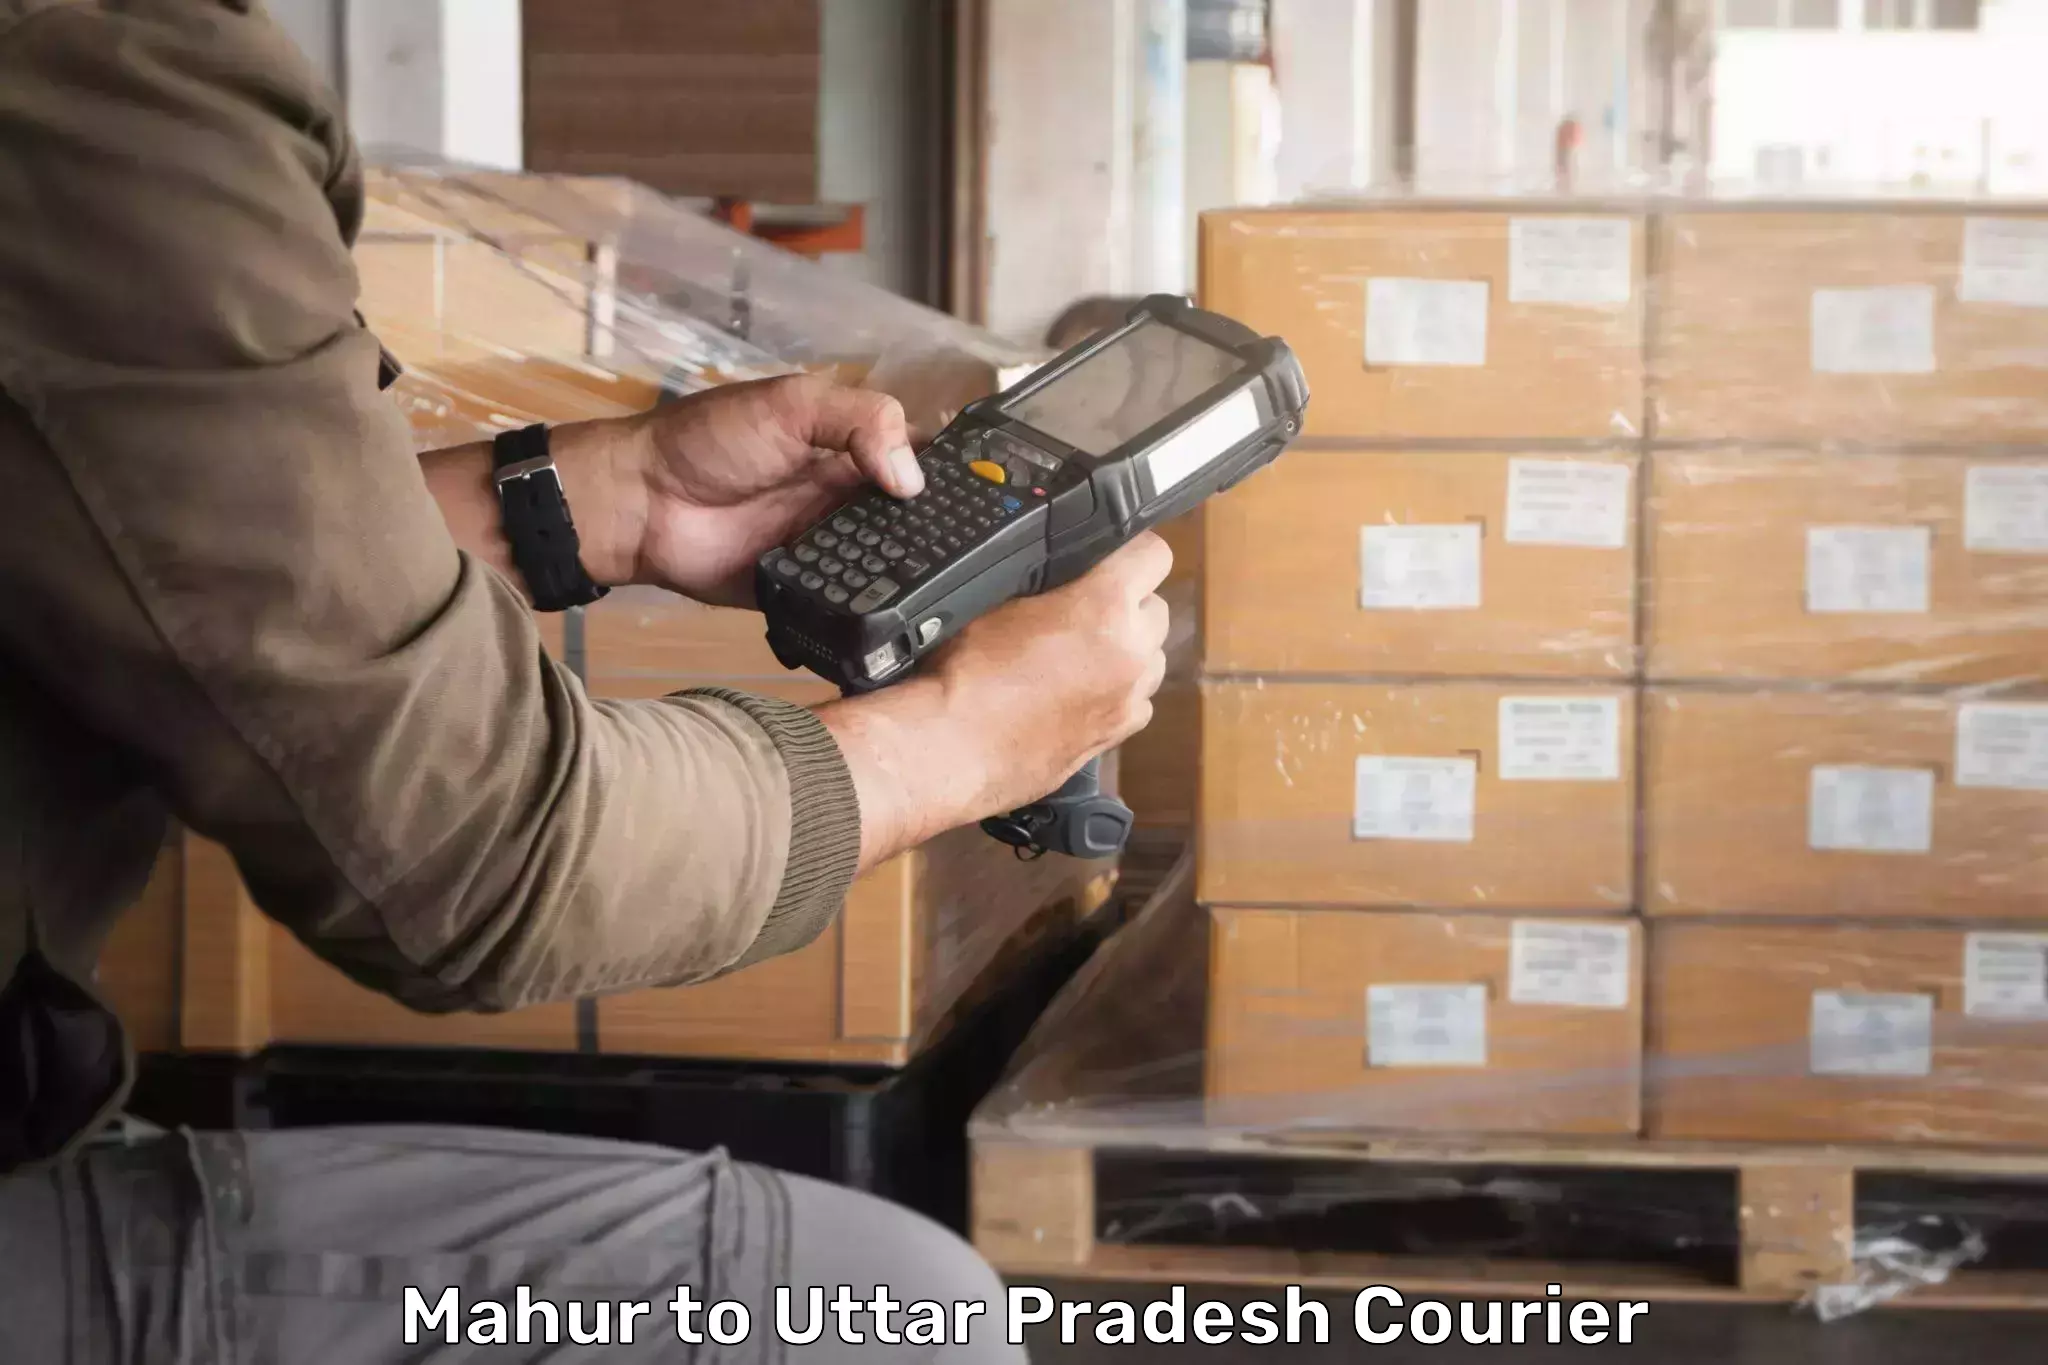 Logistics service provider Mahur to Uttar Pradesh